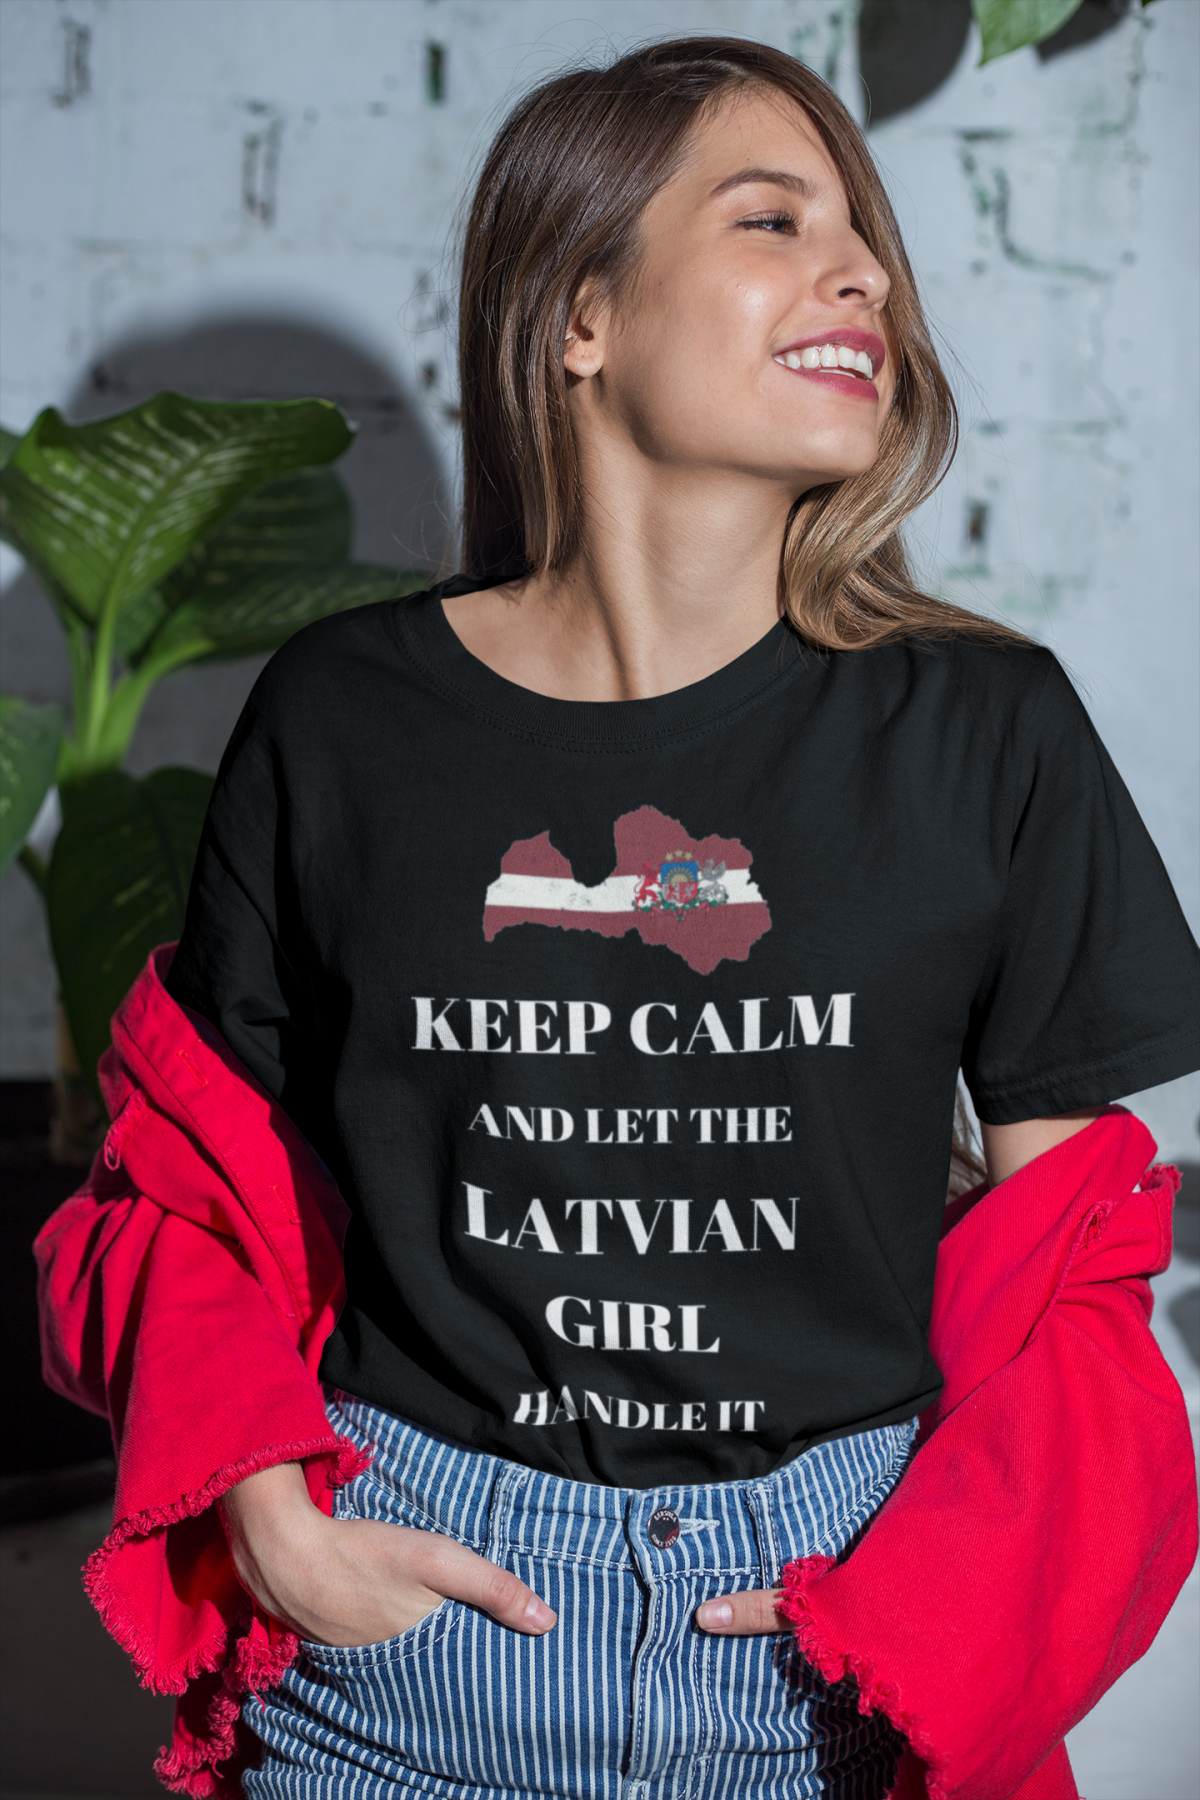 tkrekls "Let the Latvian girl handle it"